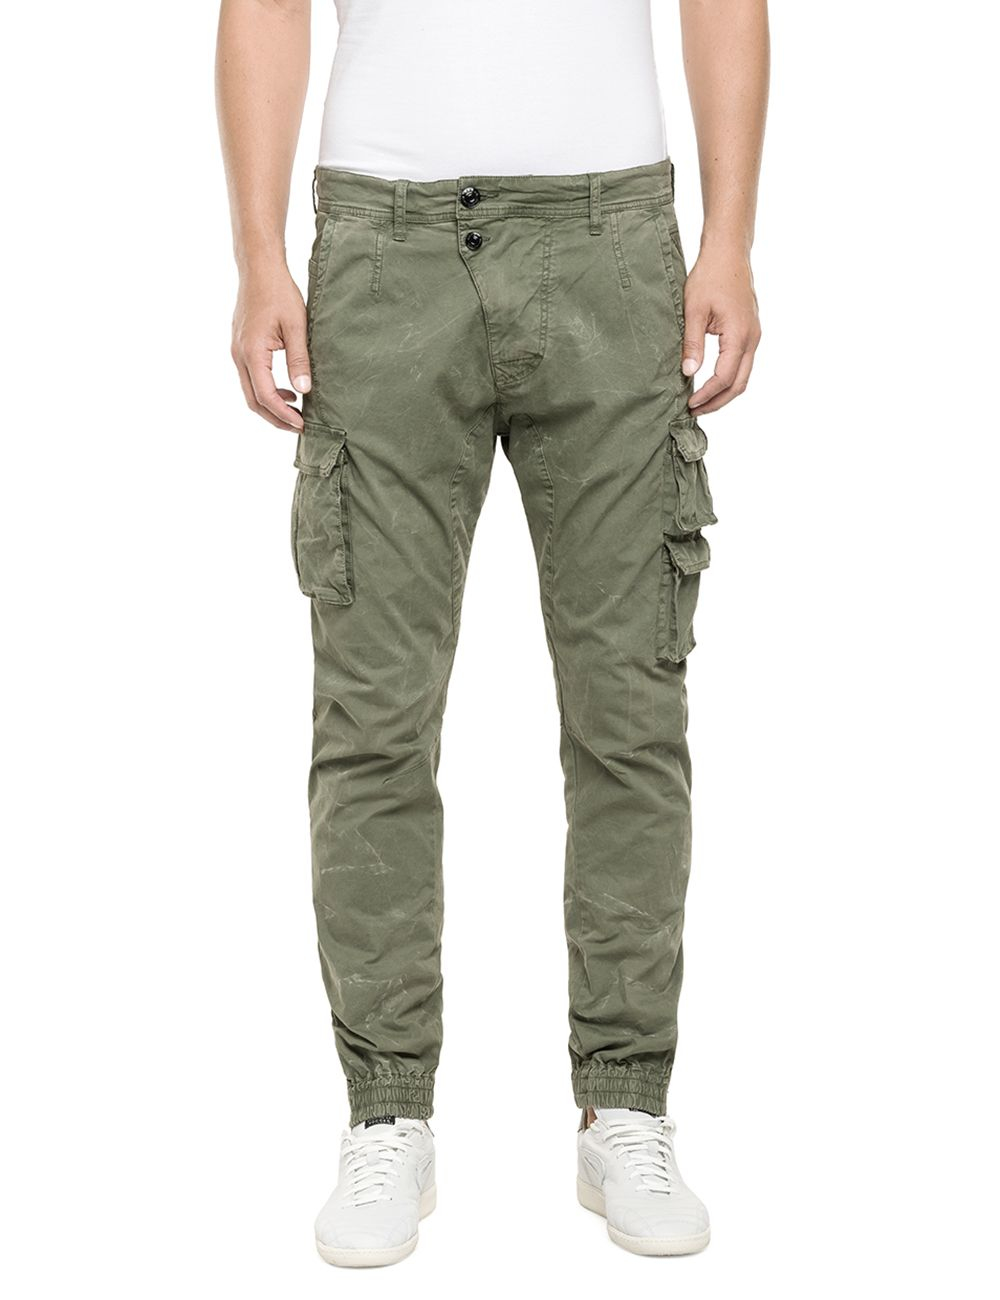 Green Cotton Pants | Pant So